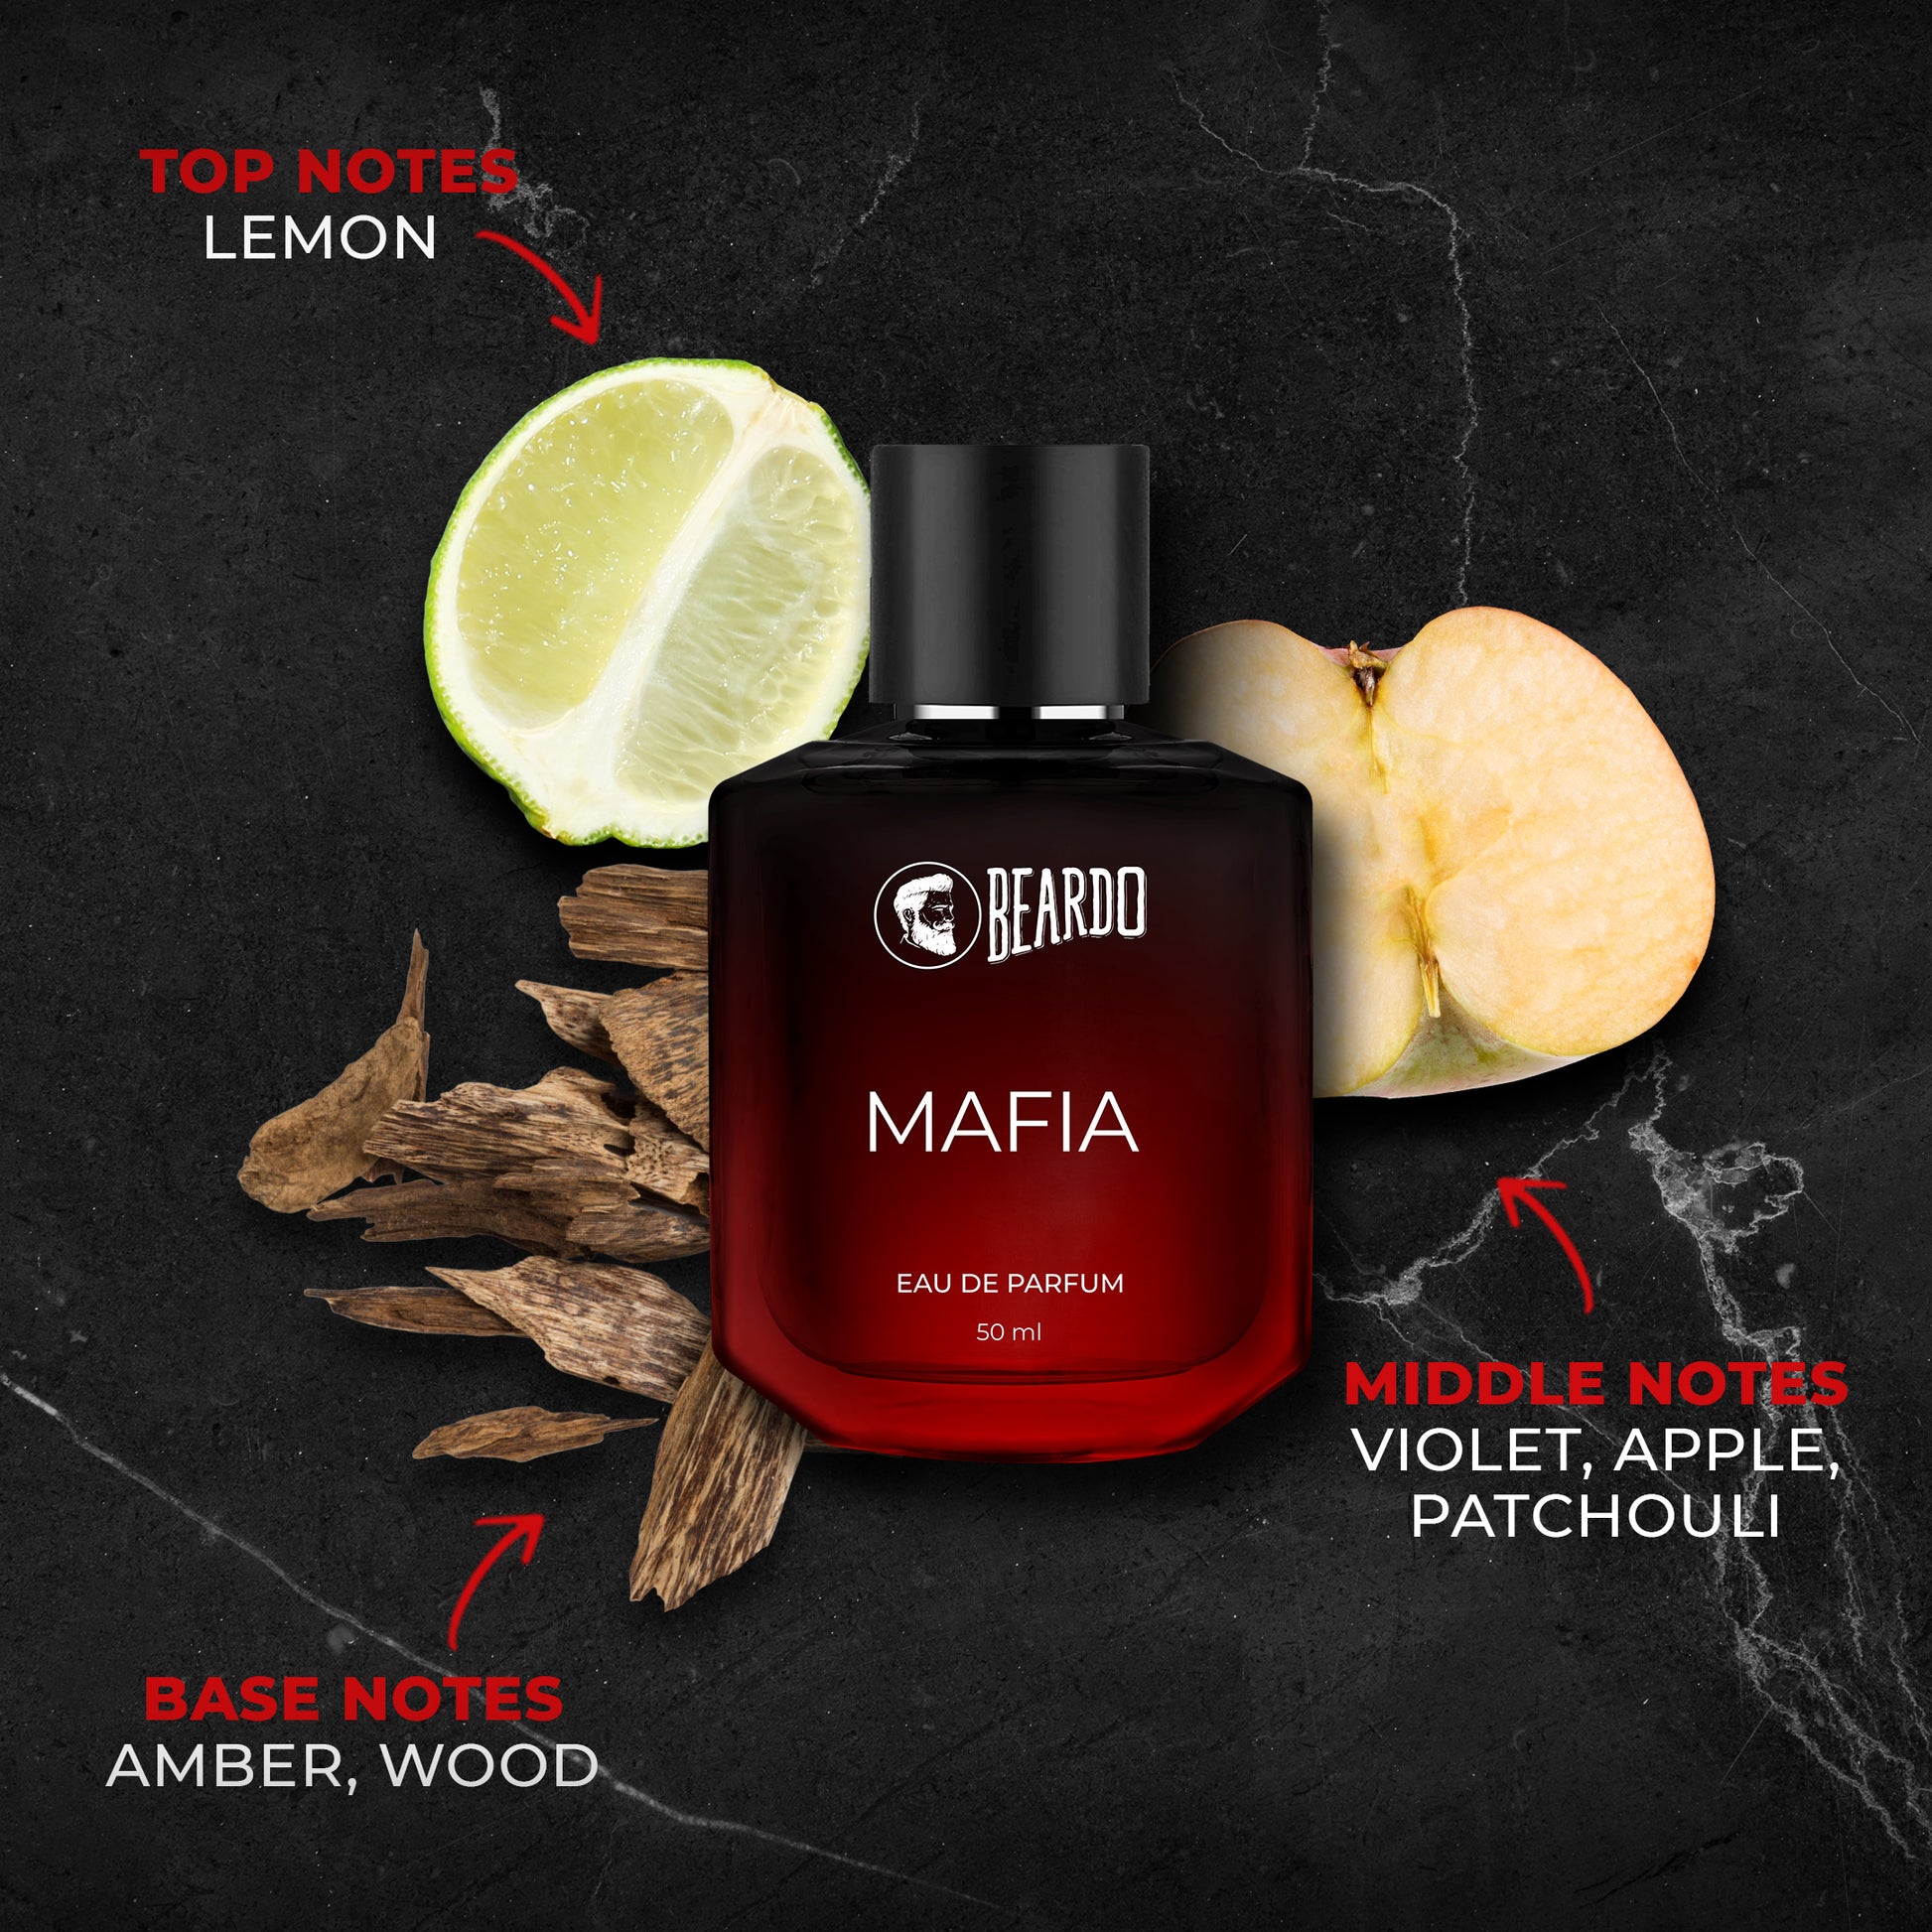 Beardo Whisky Smoke & Mafia Perfume EDP Combo